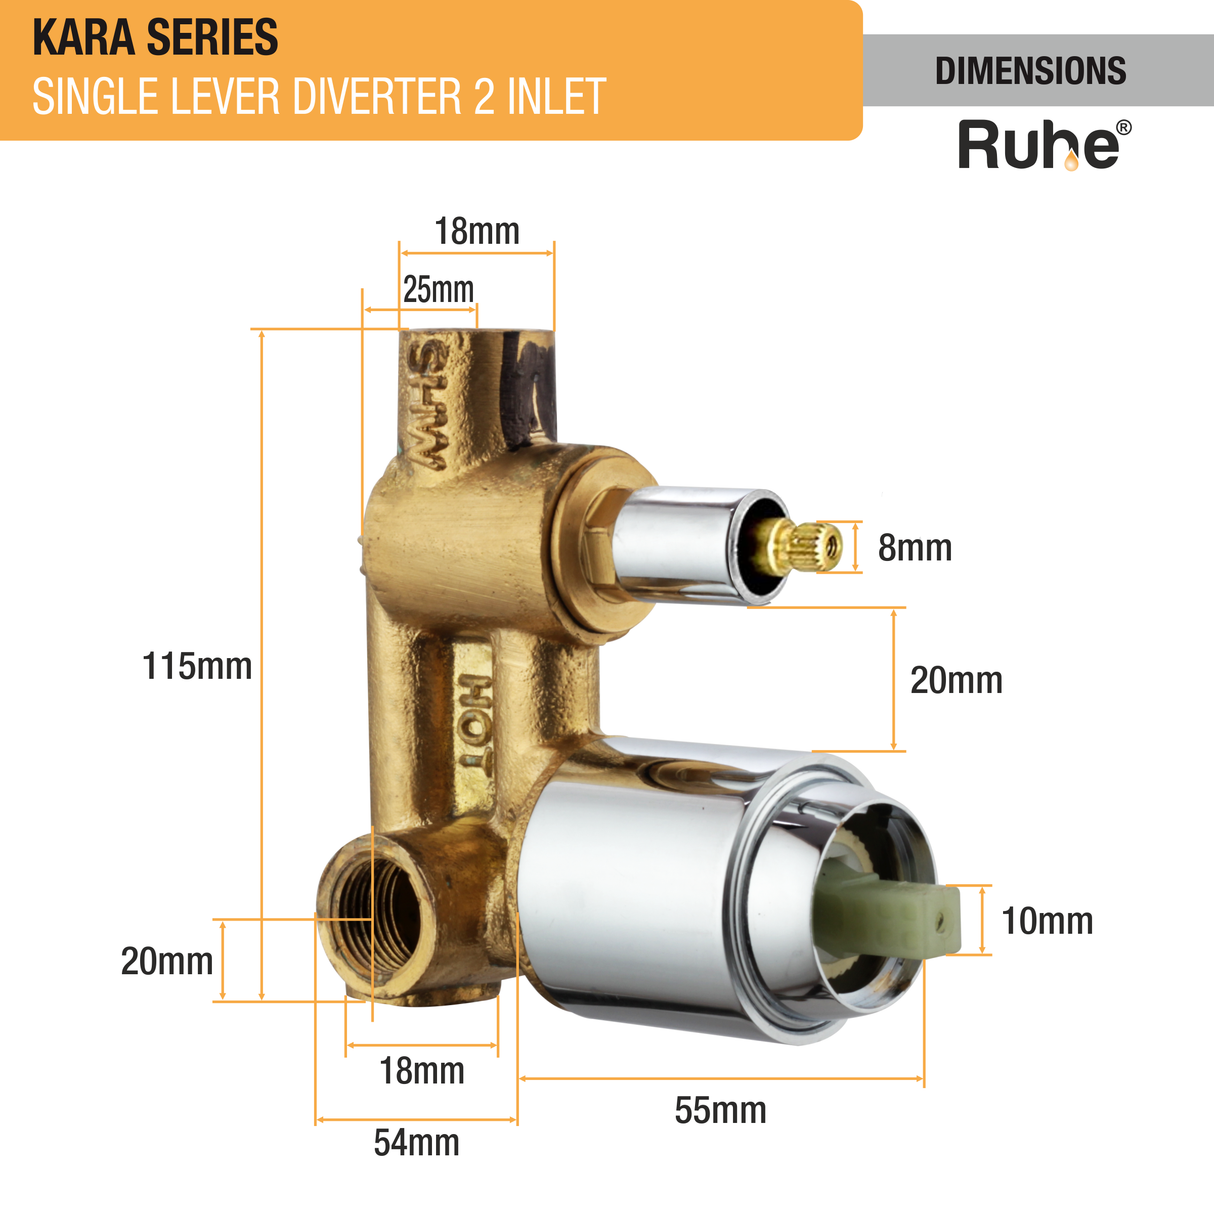 Kara Single Lever Diverter 2 Inlet Complete Faucet dimensions